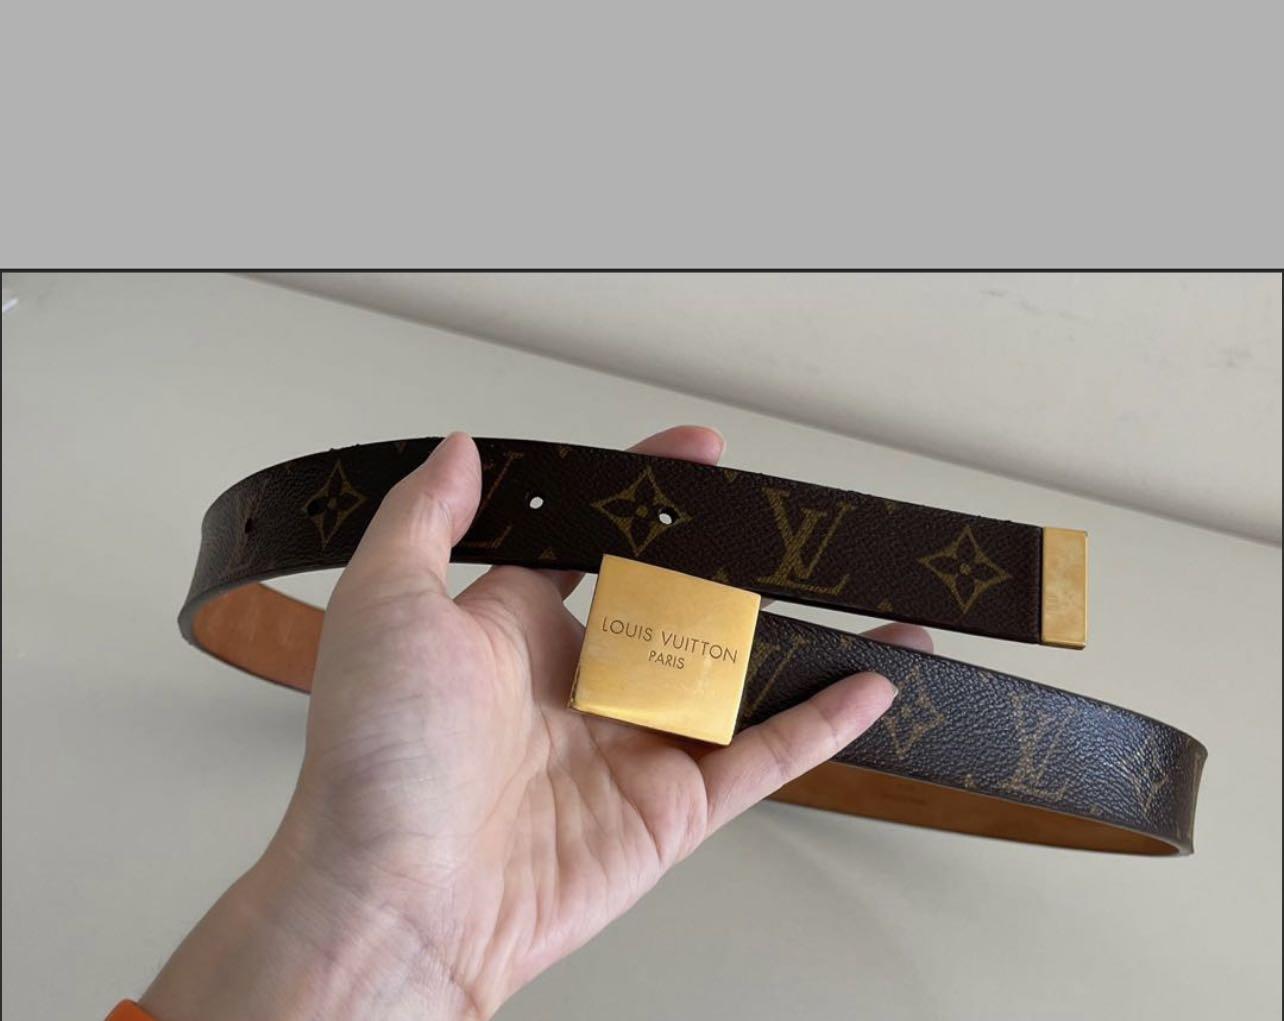 Authentic Louis Vuitton LV Logo Square Buckle Monogram Belt From